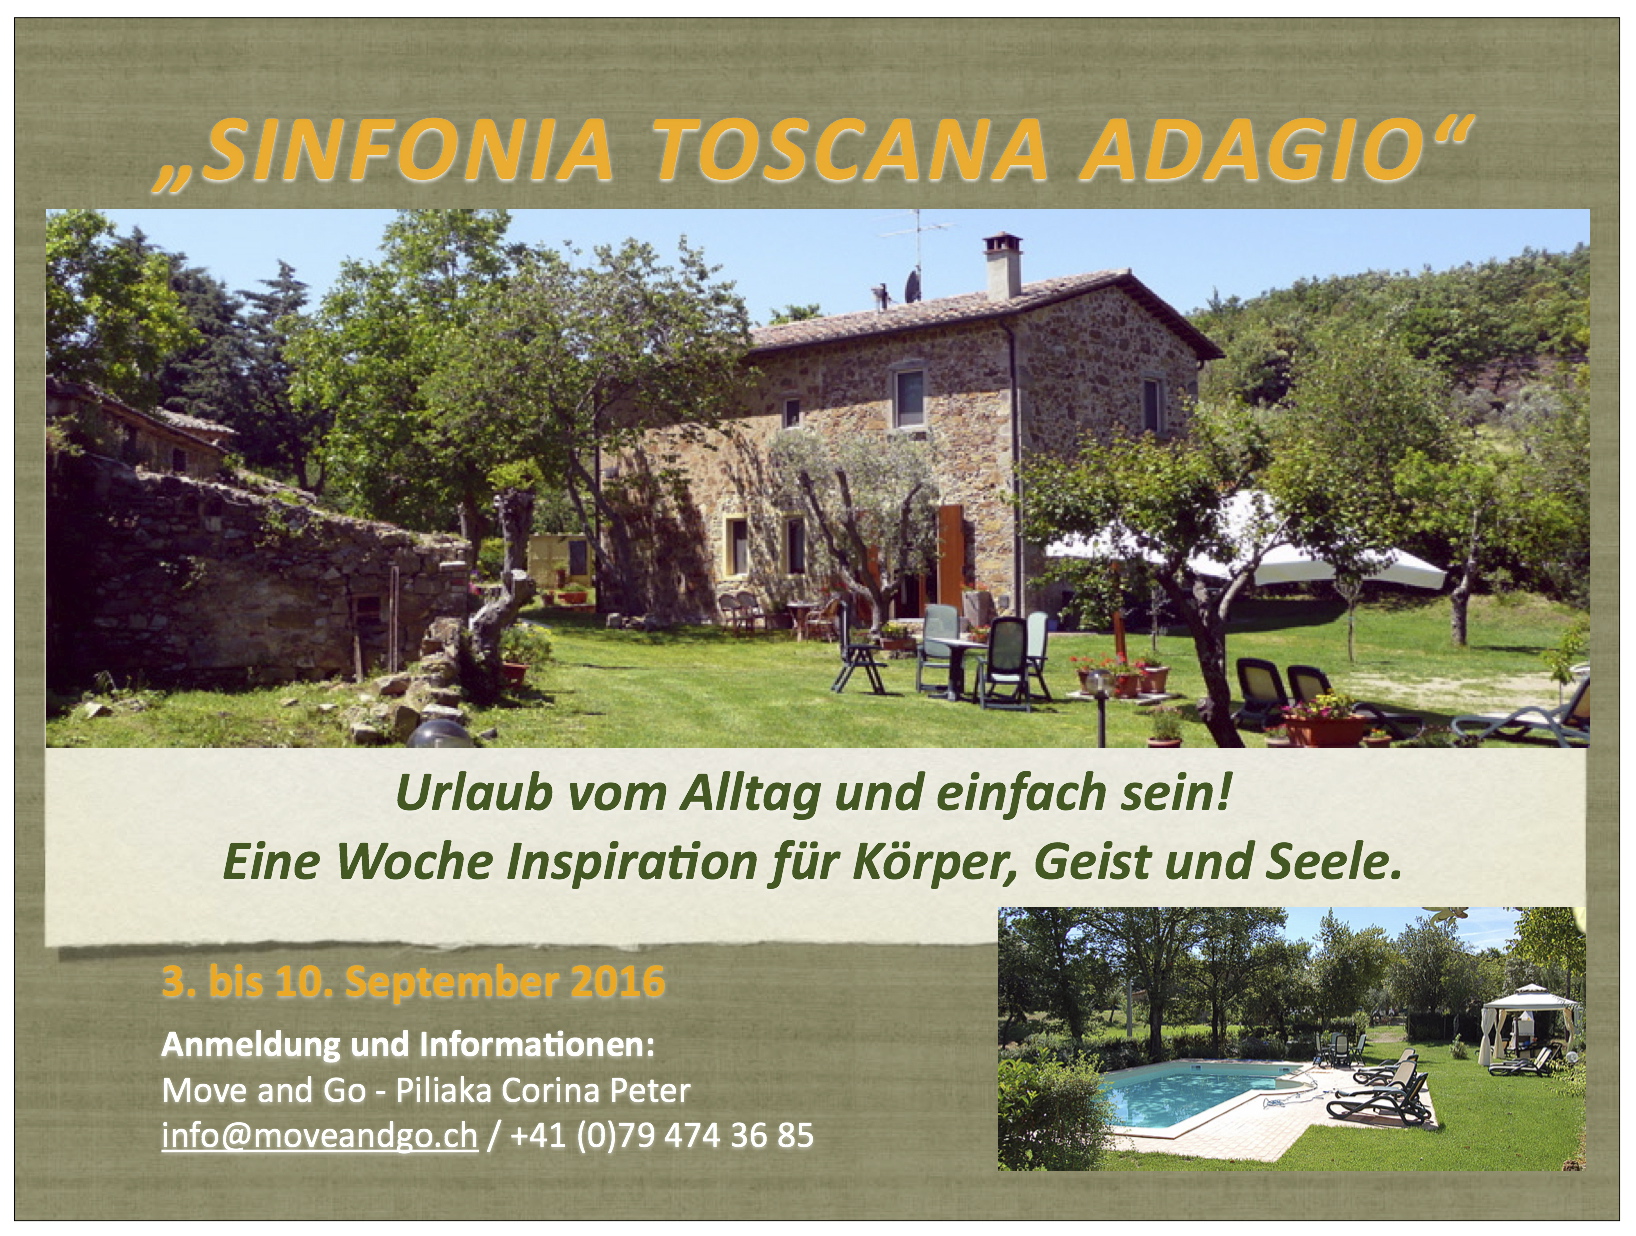 Toscana 2016 - Sinfonia Toscana Adagio